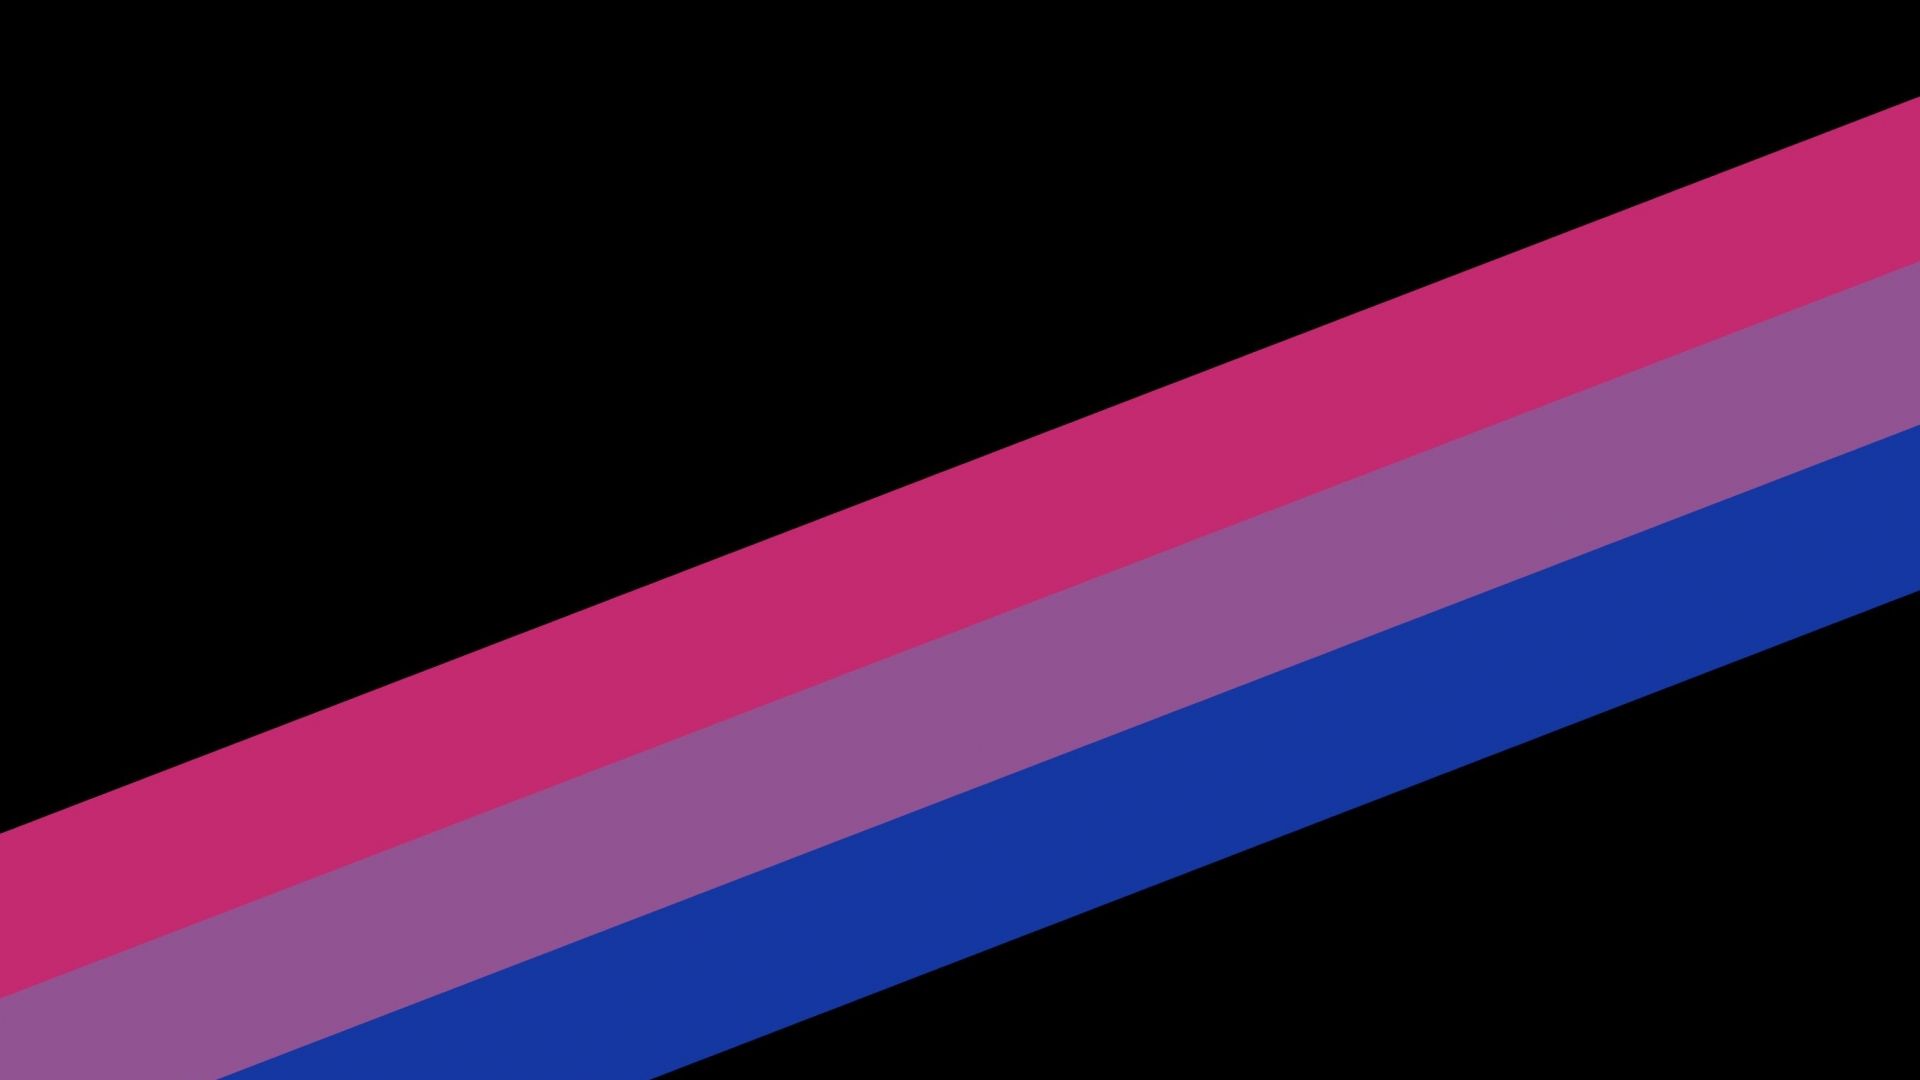 Free download Bi Pride Flag Wallpapers Top Bi Pride Flag Backgrounds [2706x2706] for your Desktop, Mobile & Tablet